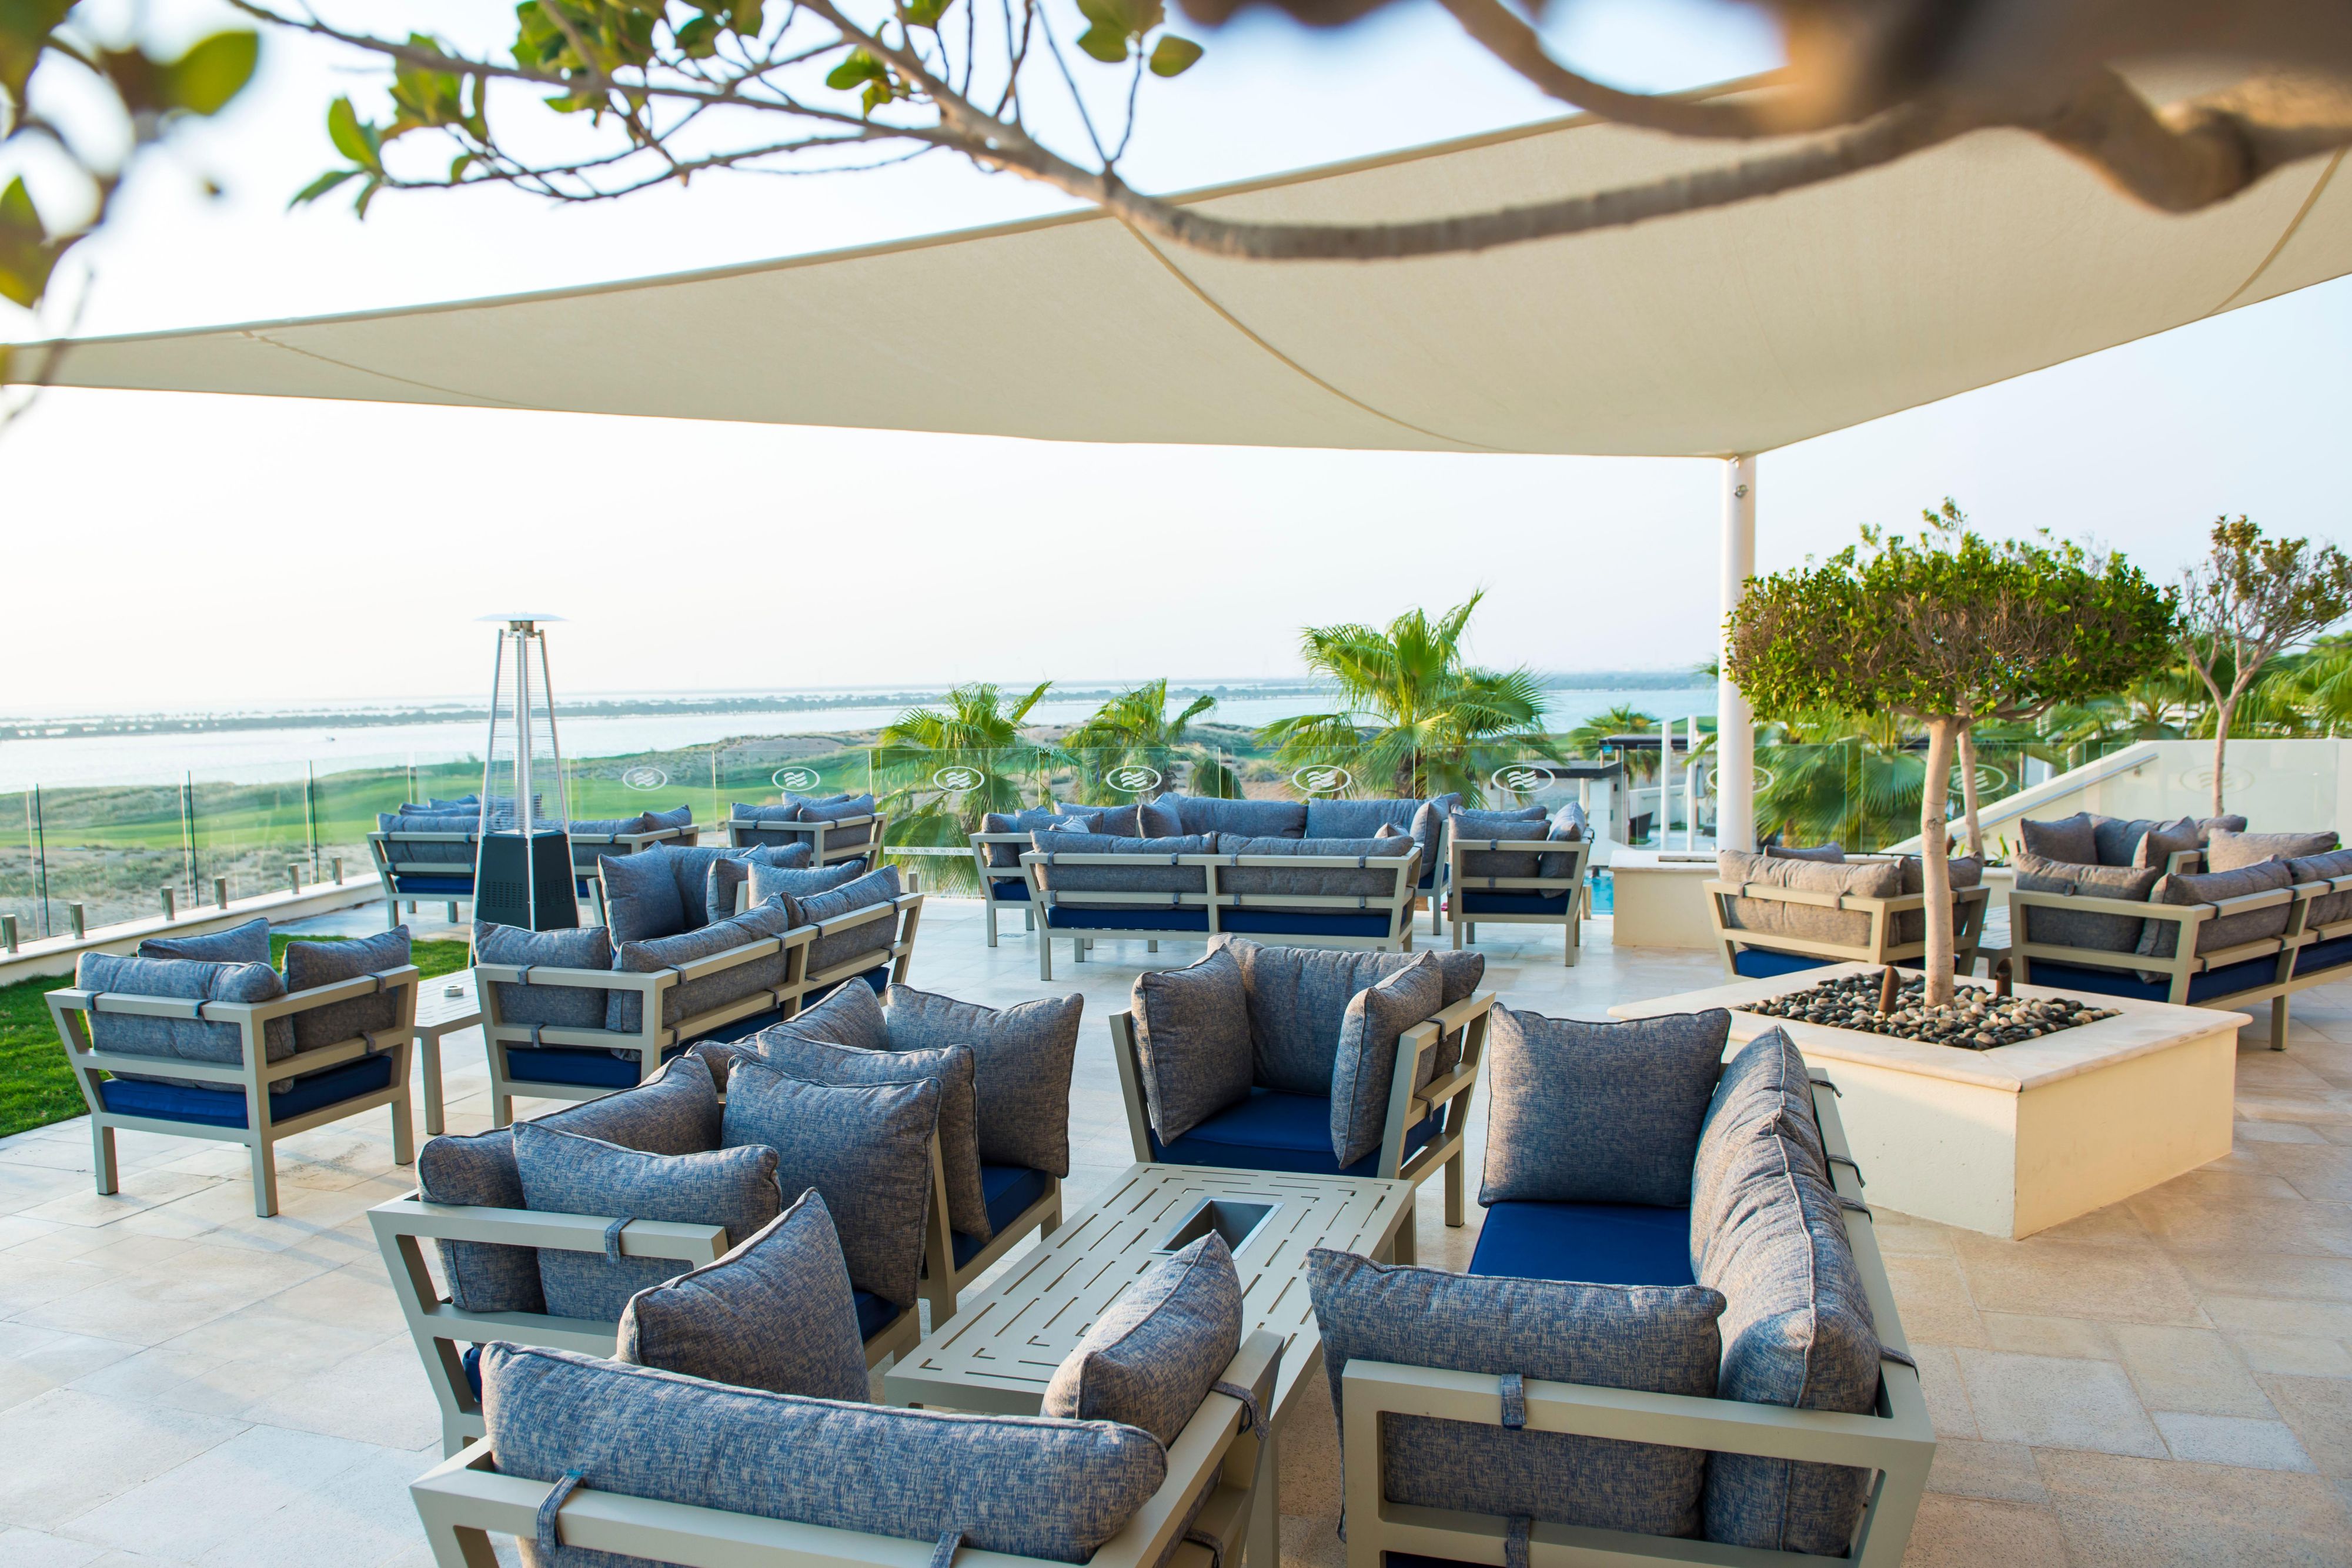 Enjoy the views from Stills Restaurant &amp; Bar Terrace